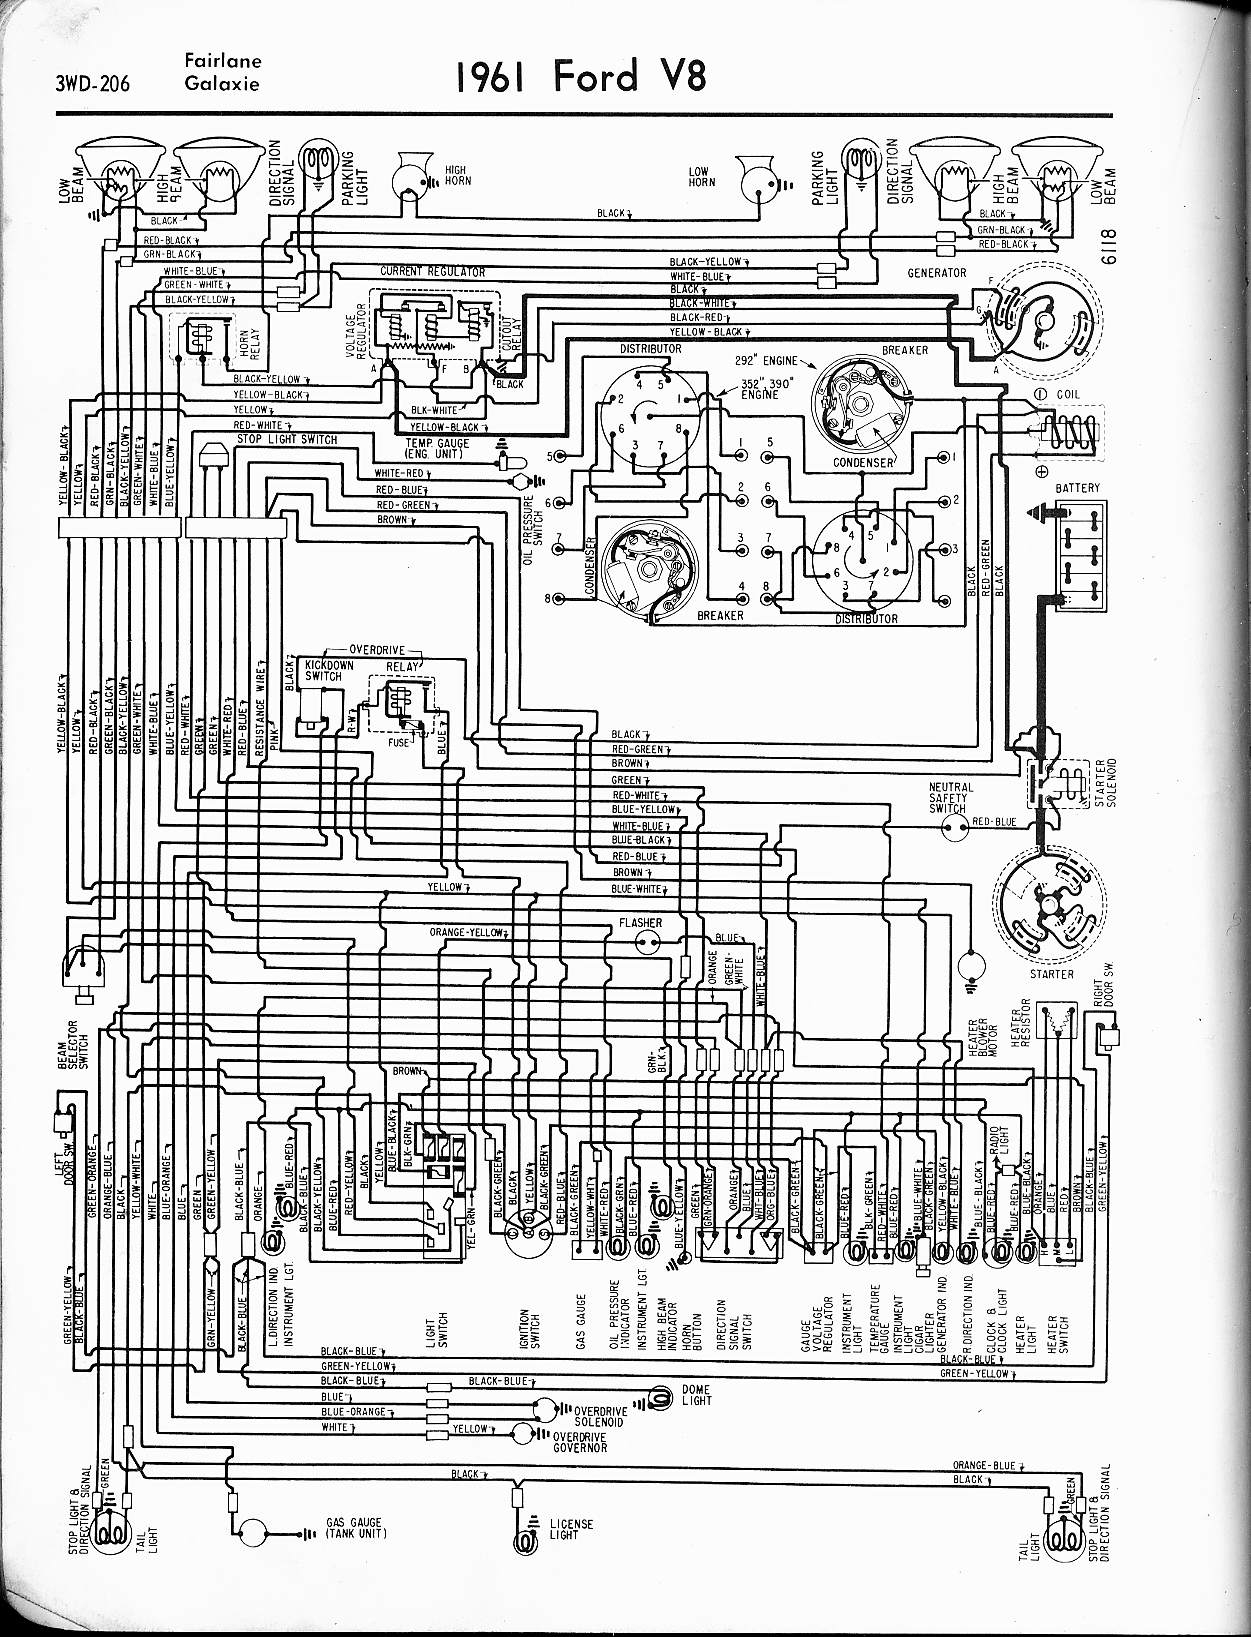 Ford Bantam Wiring Diagram Free | Wiring Library - Ford F350 Wiring Diagram Free